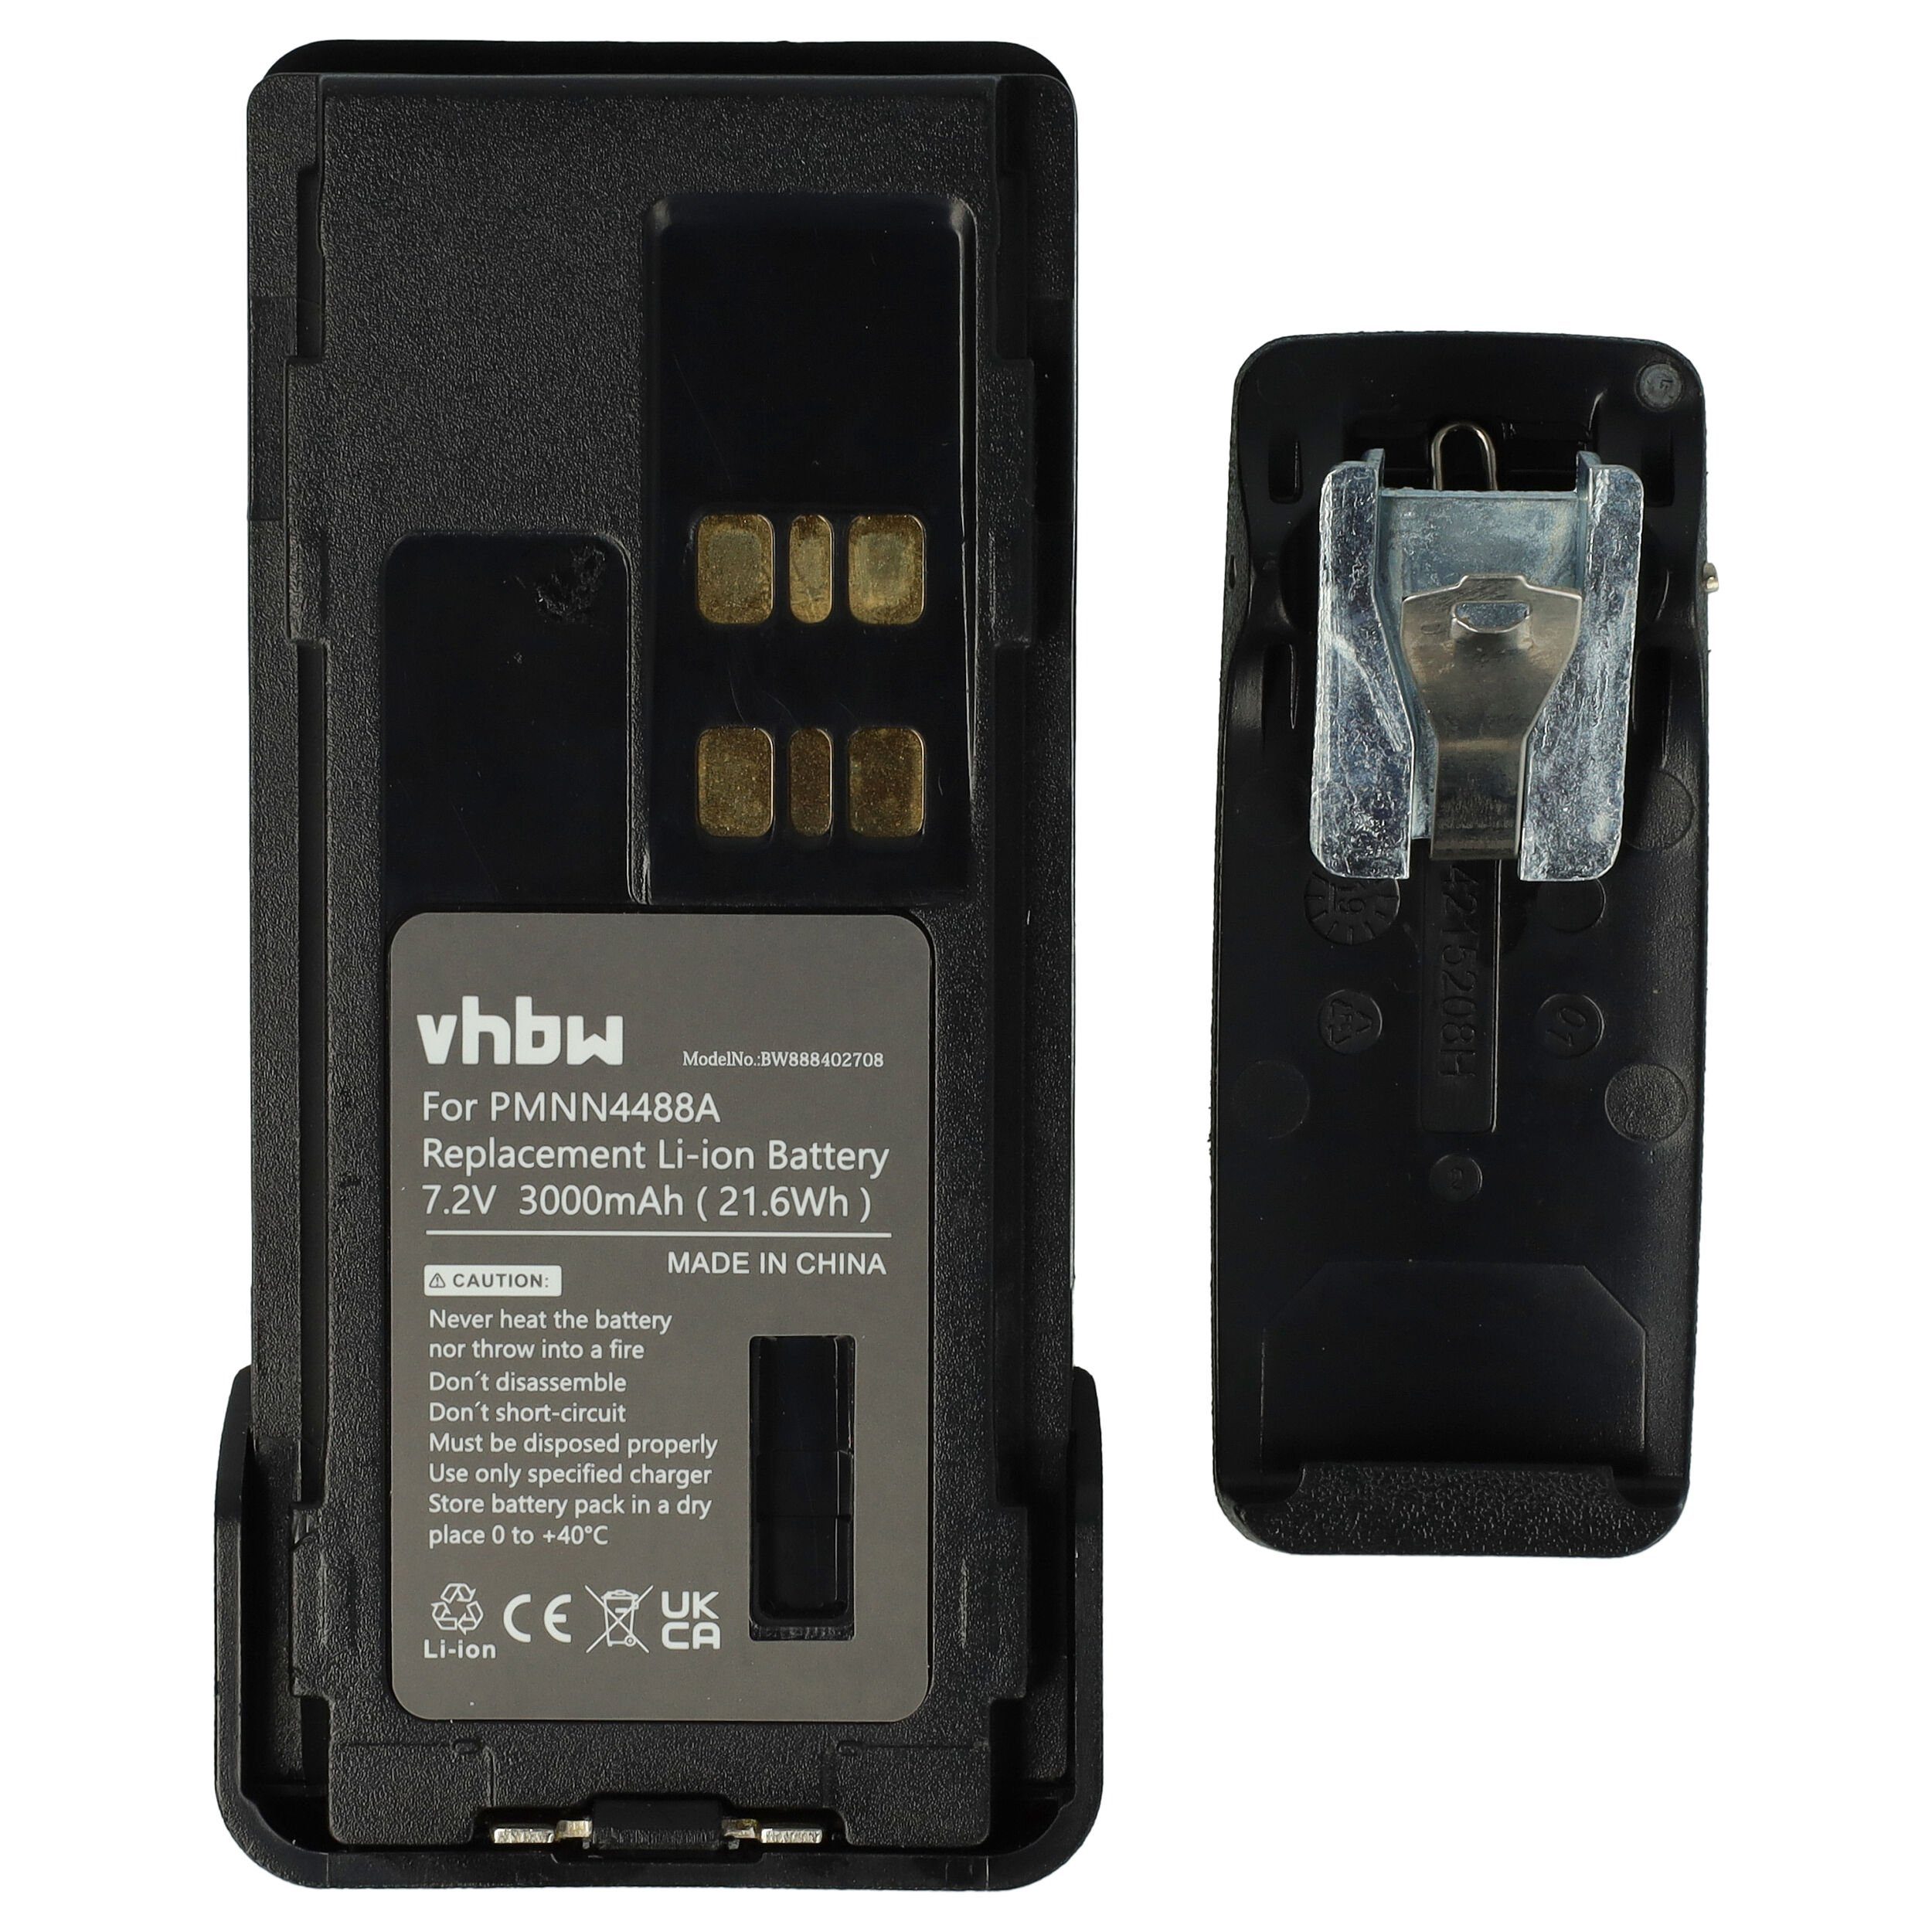 vhbw passend für Motorola DP2400, DP2600, DP2600E, DP4400E, DP2400e, DP4400 Akku 3000 mAh